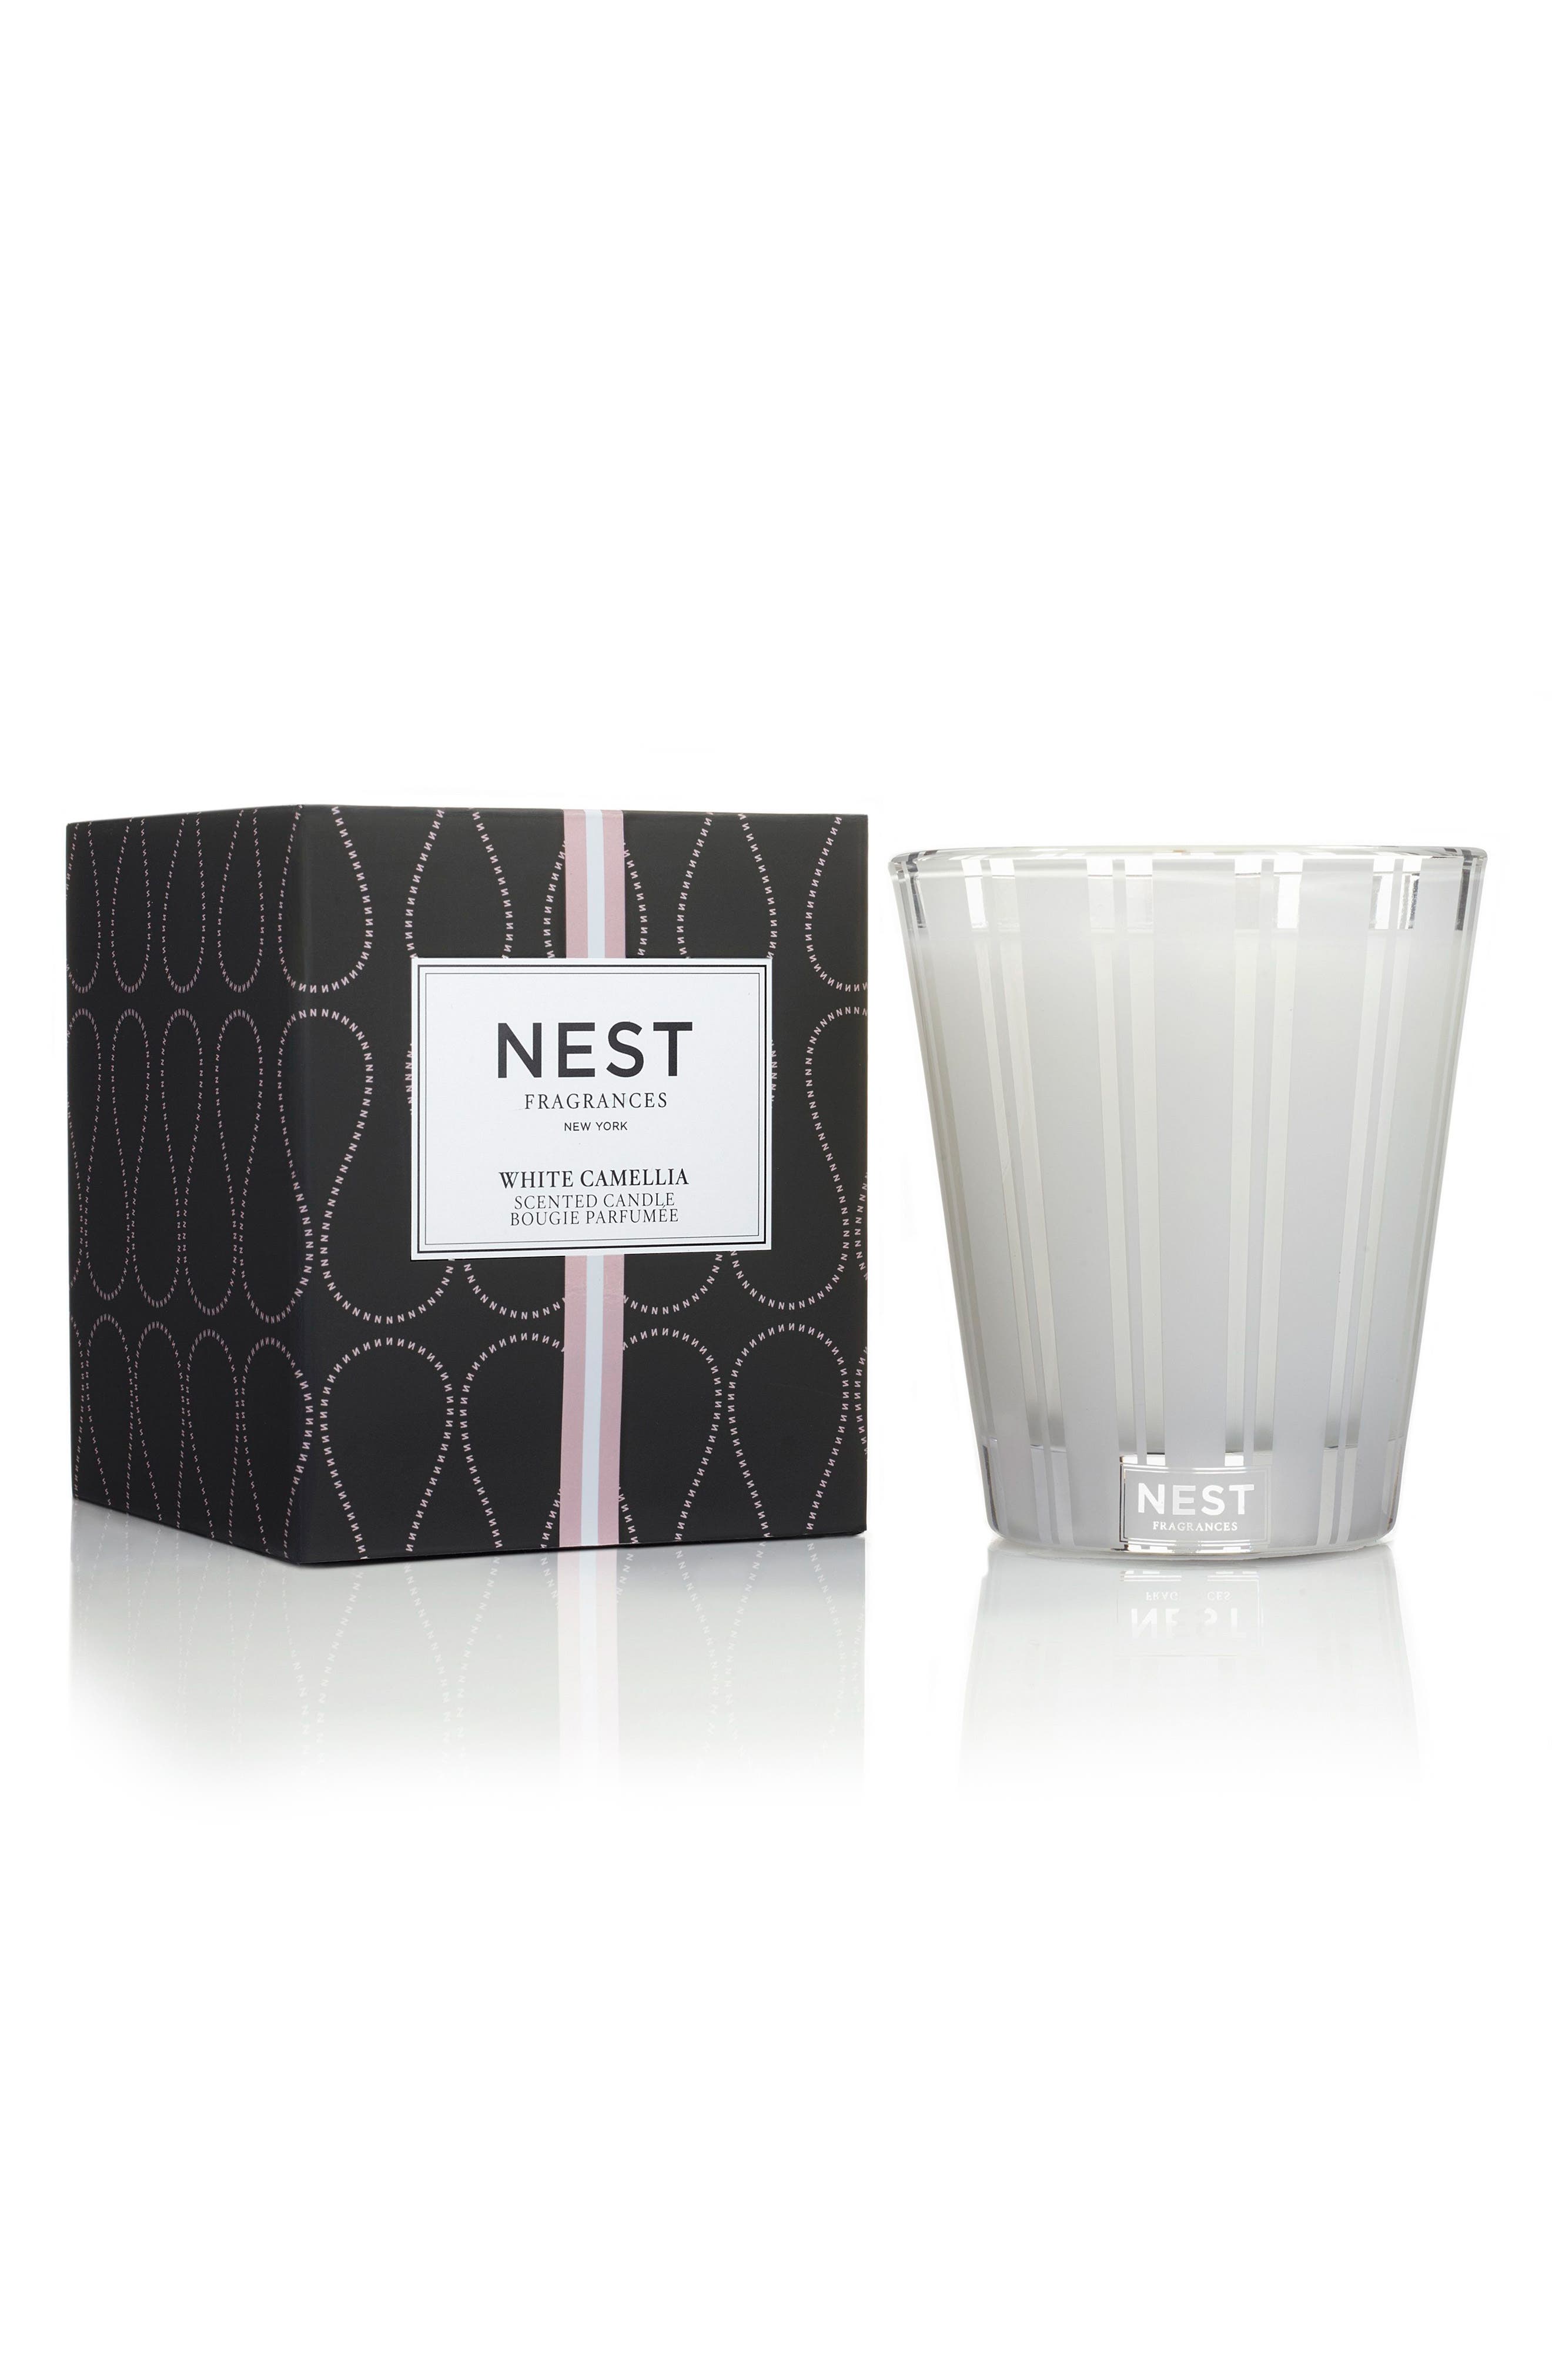 NEST Fragrances WHITE CAMILLIA Reed Diffuser New in Box! 